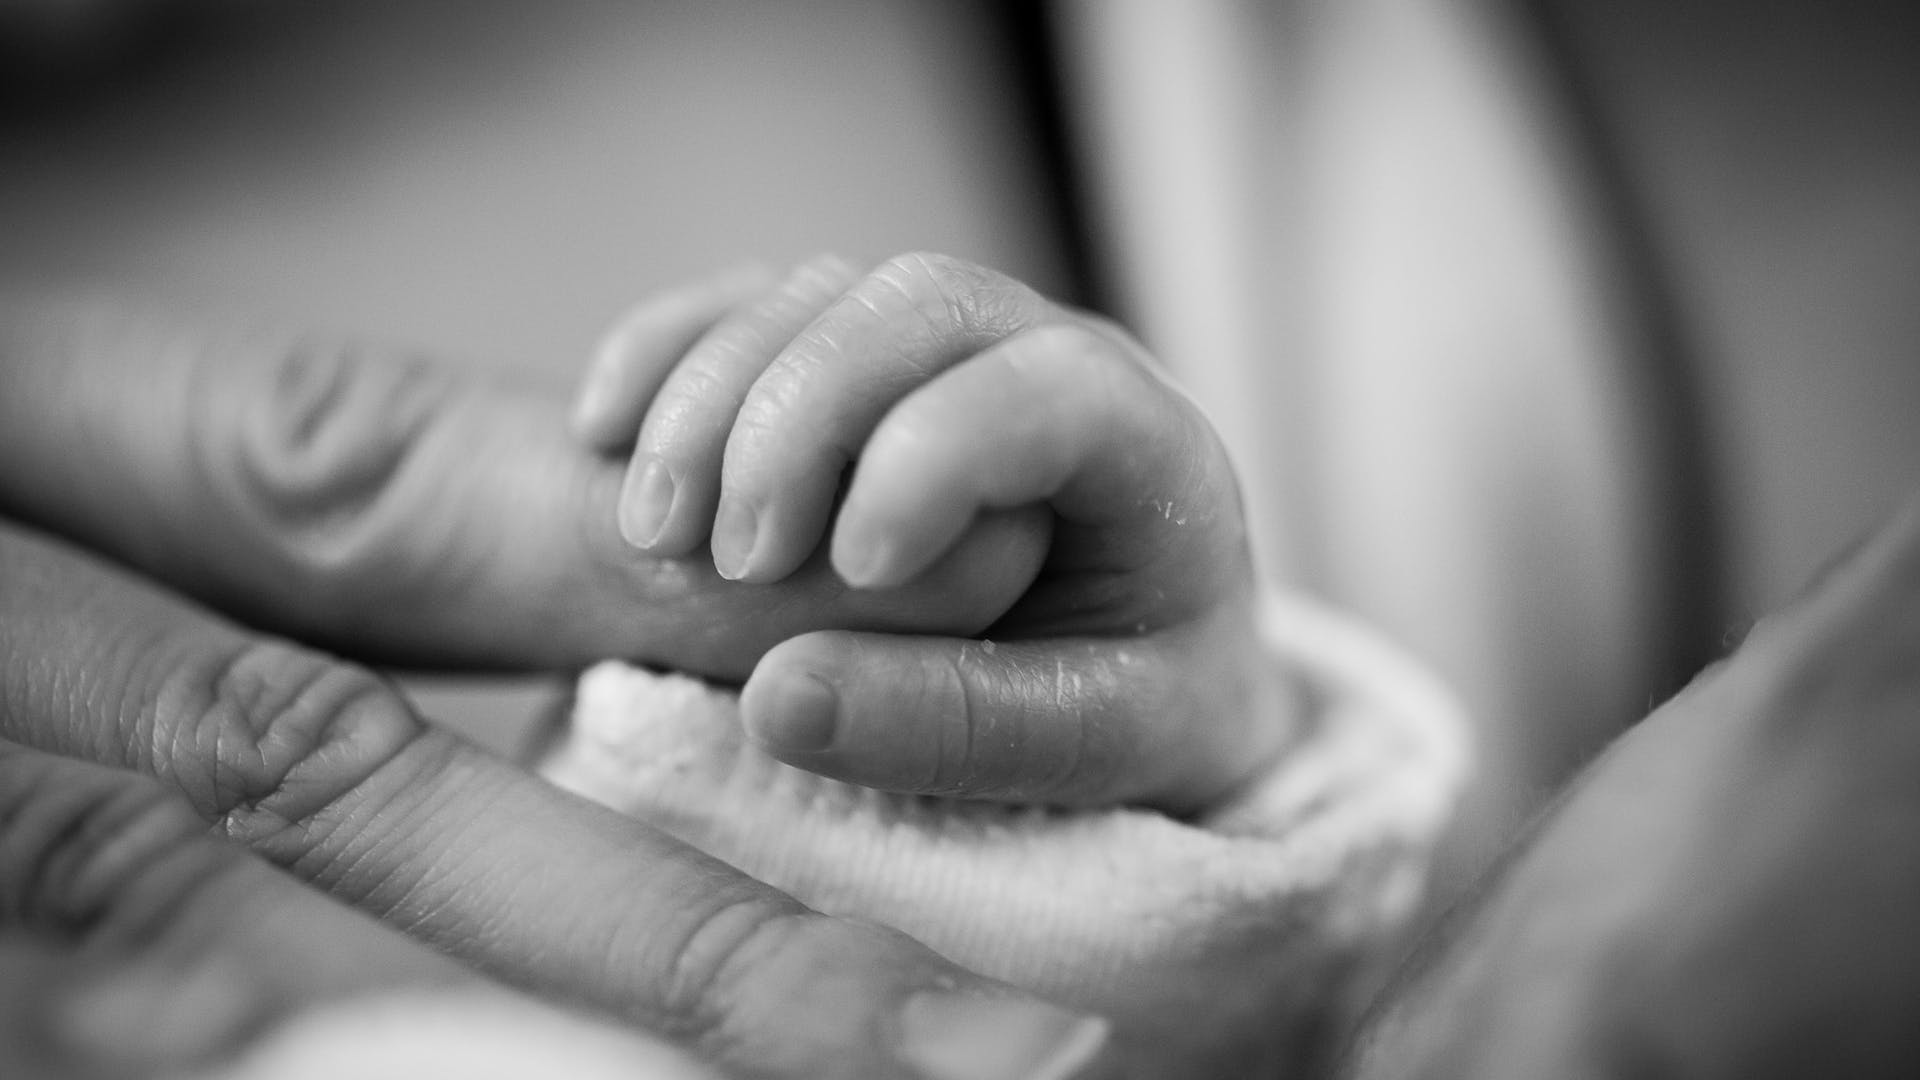 Study on premature infants advances understanding of healthcare